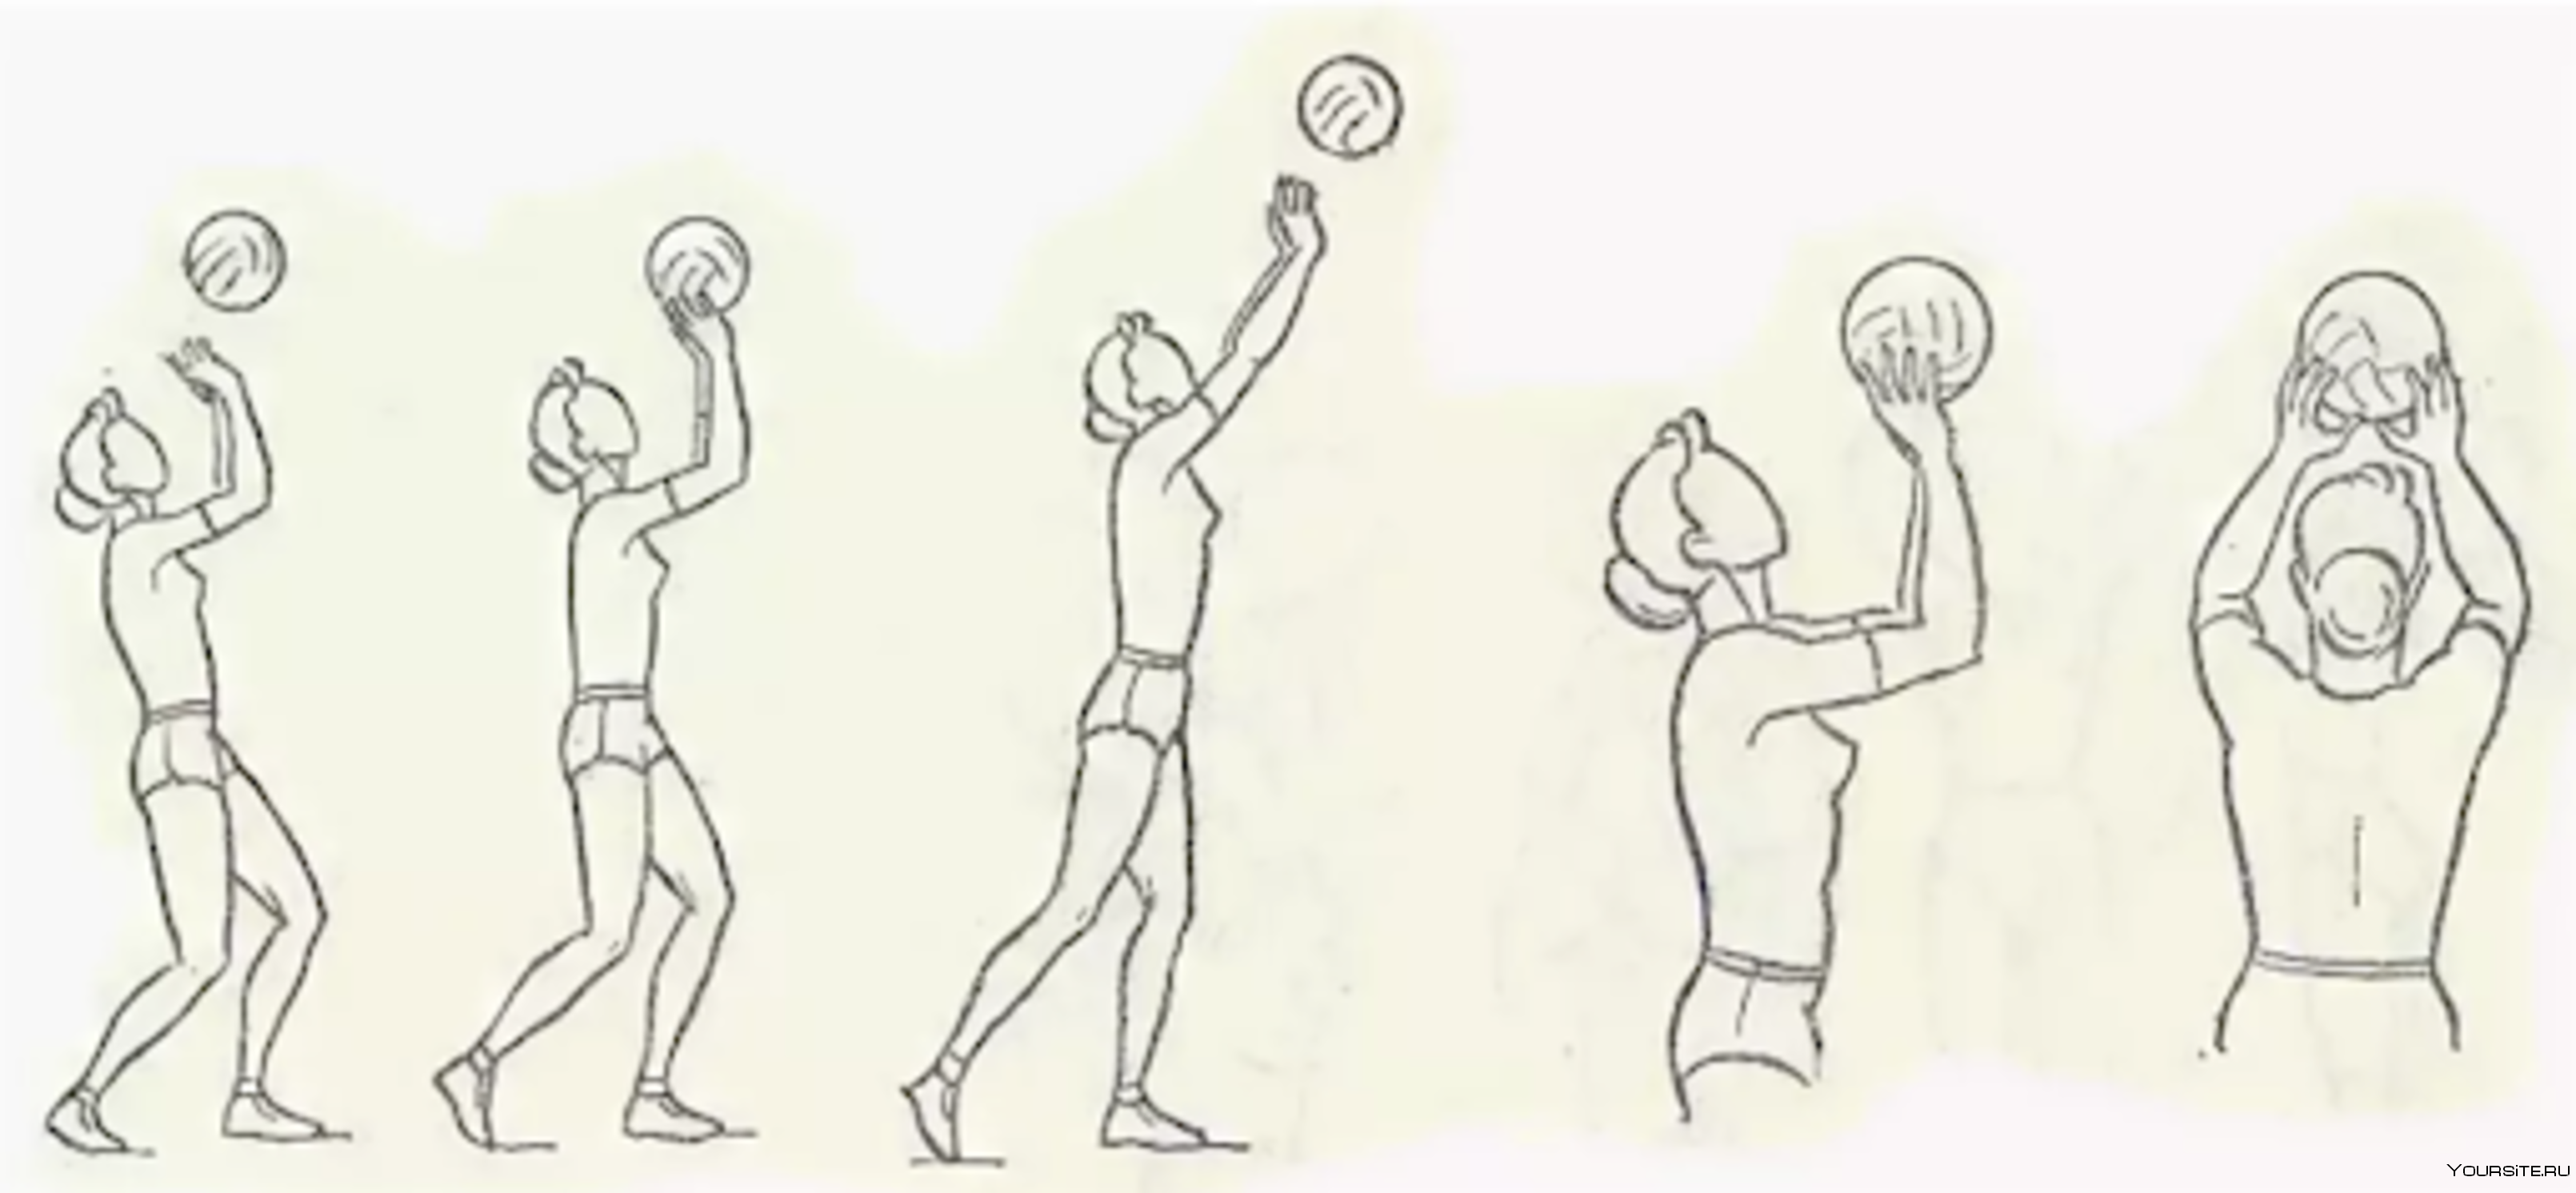 Передача мяча 2 руками сверху в волейболе. Техника передачи мяча двумя руками сверху в волейболе. Техника приема и передачи мяча сверху двумя руками в волейболе. Передача двумя руками сверху в волейболе. Волейбол передача сверху и снизу